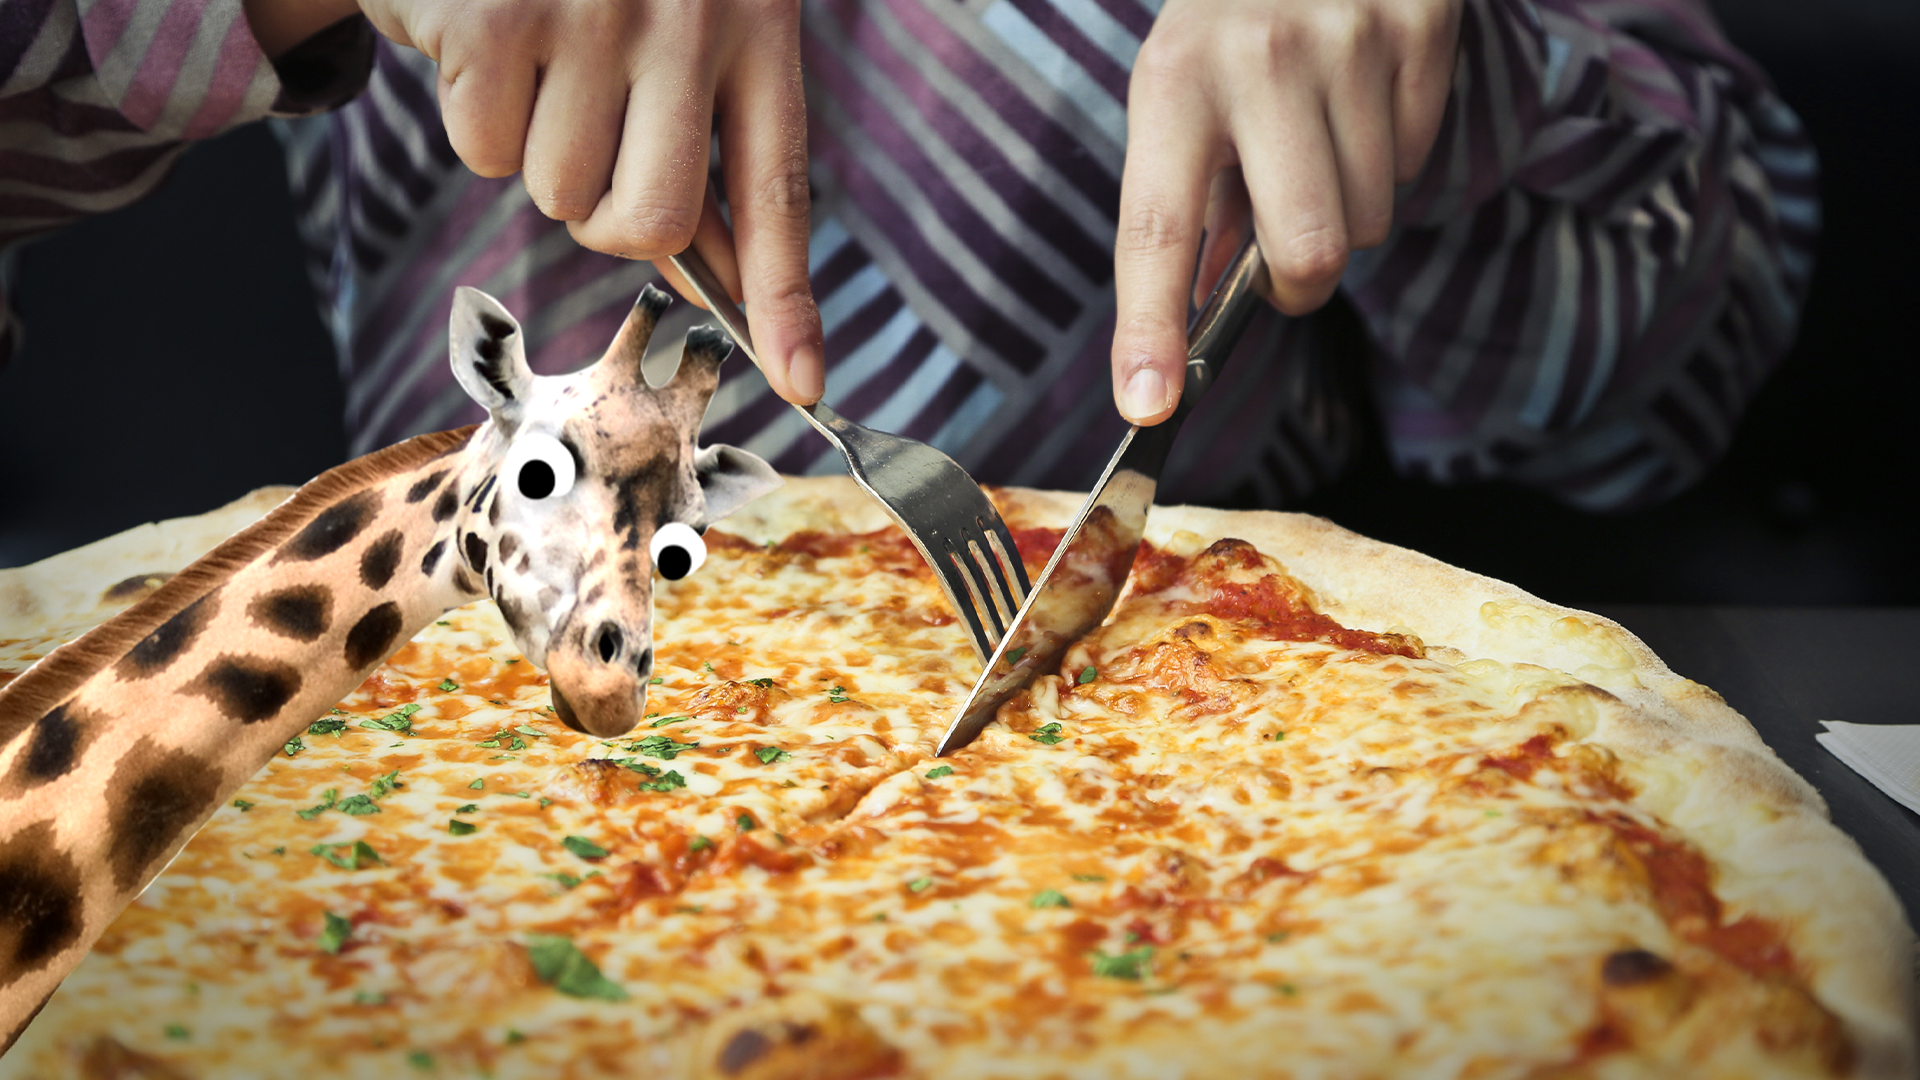 Someone eating pizza with Beano giraffe